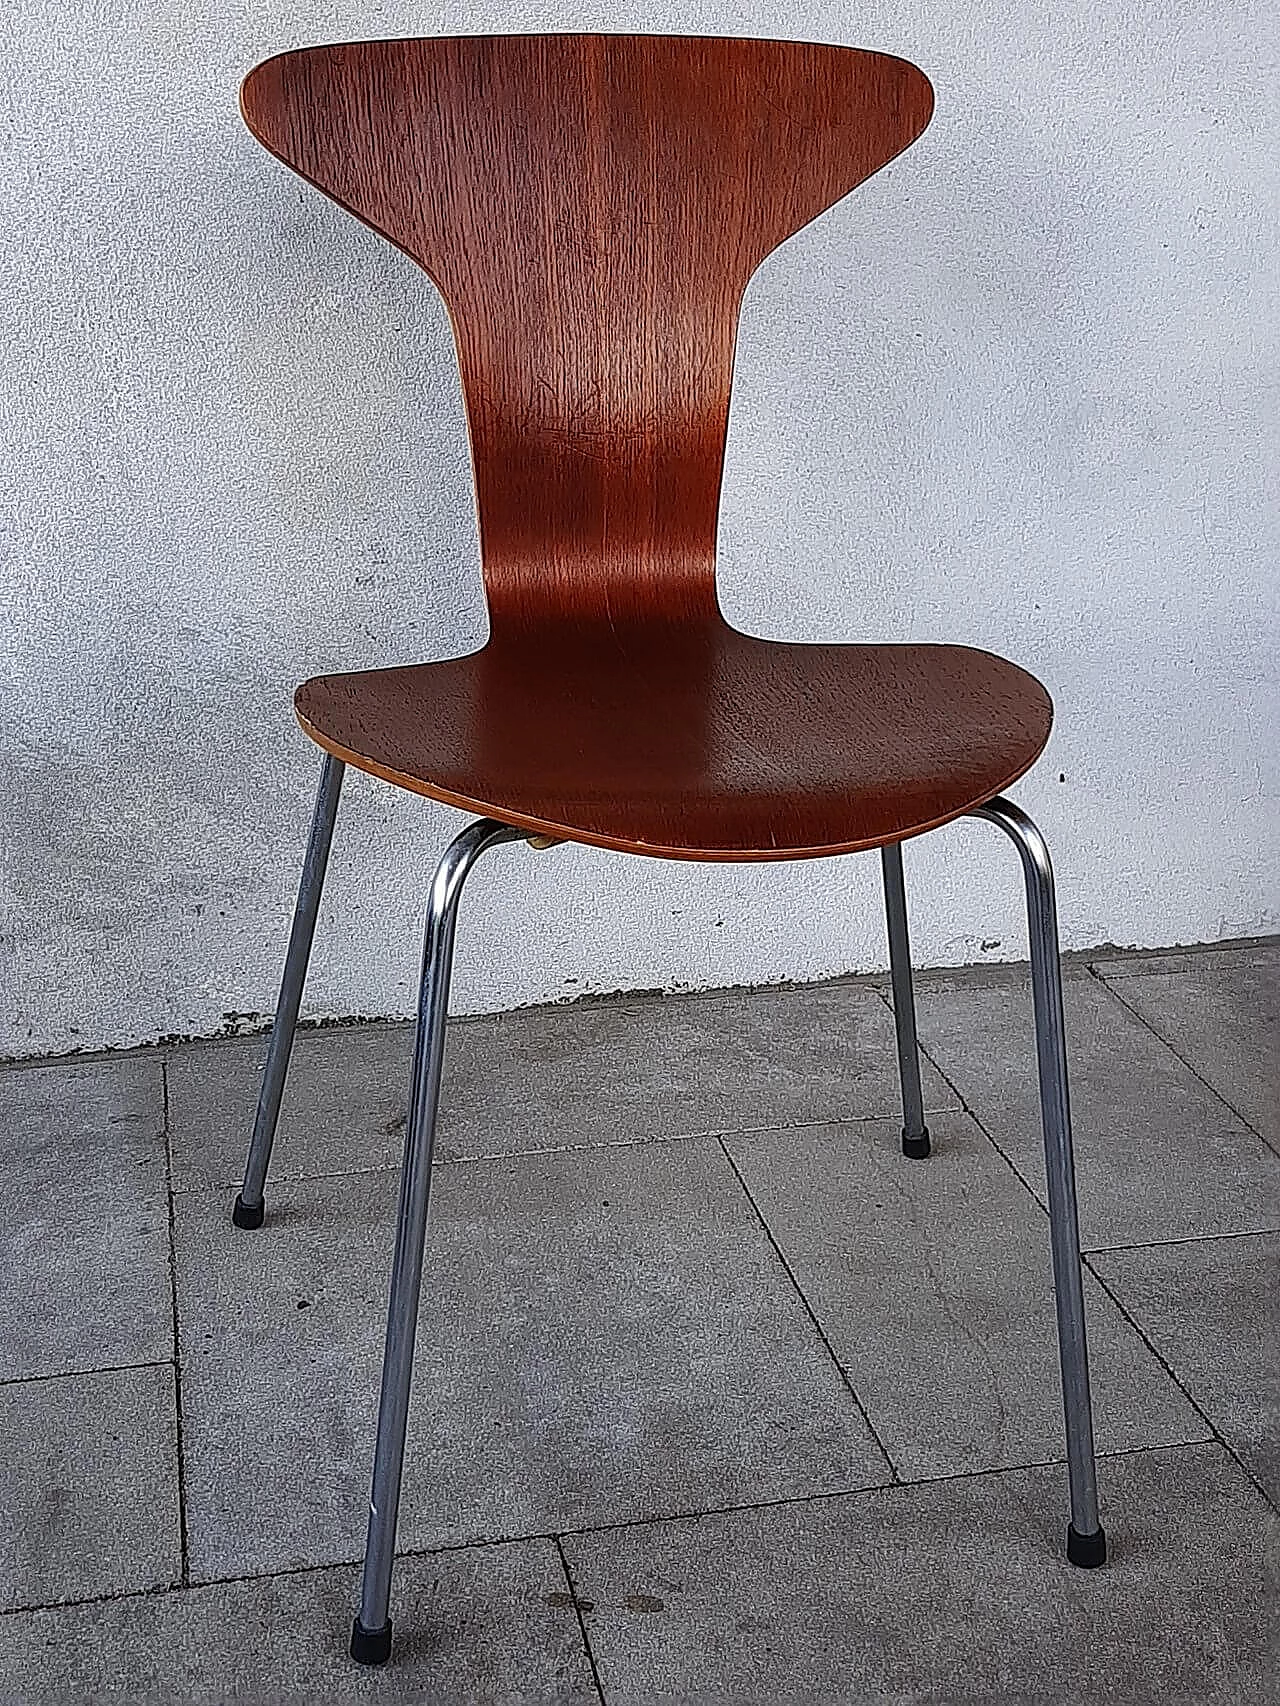 6 Chairs 3105 by Arne Jacobsen for Fritz Hansen, 1967 2